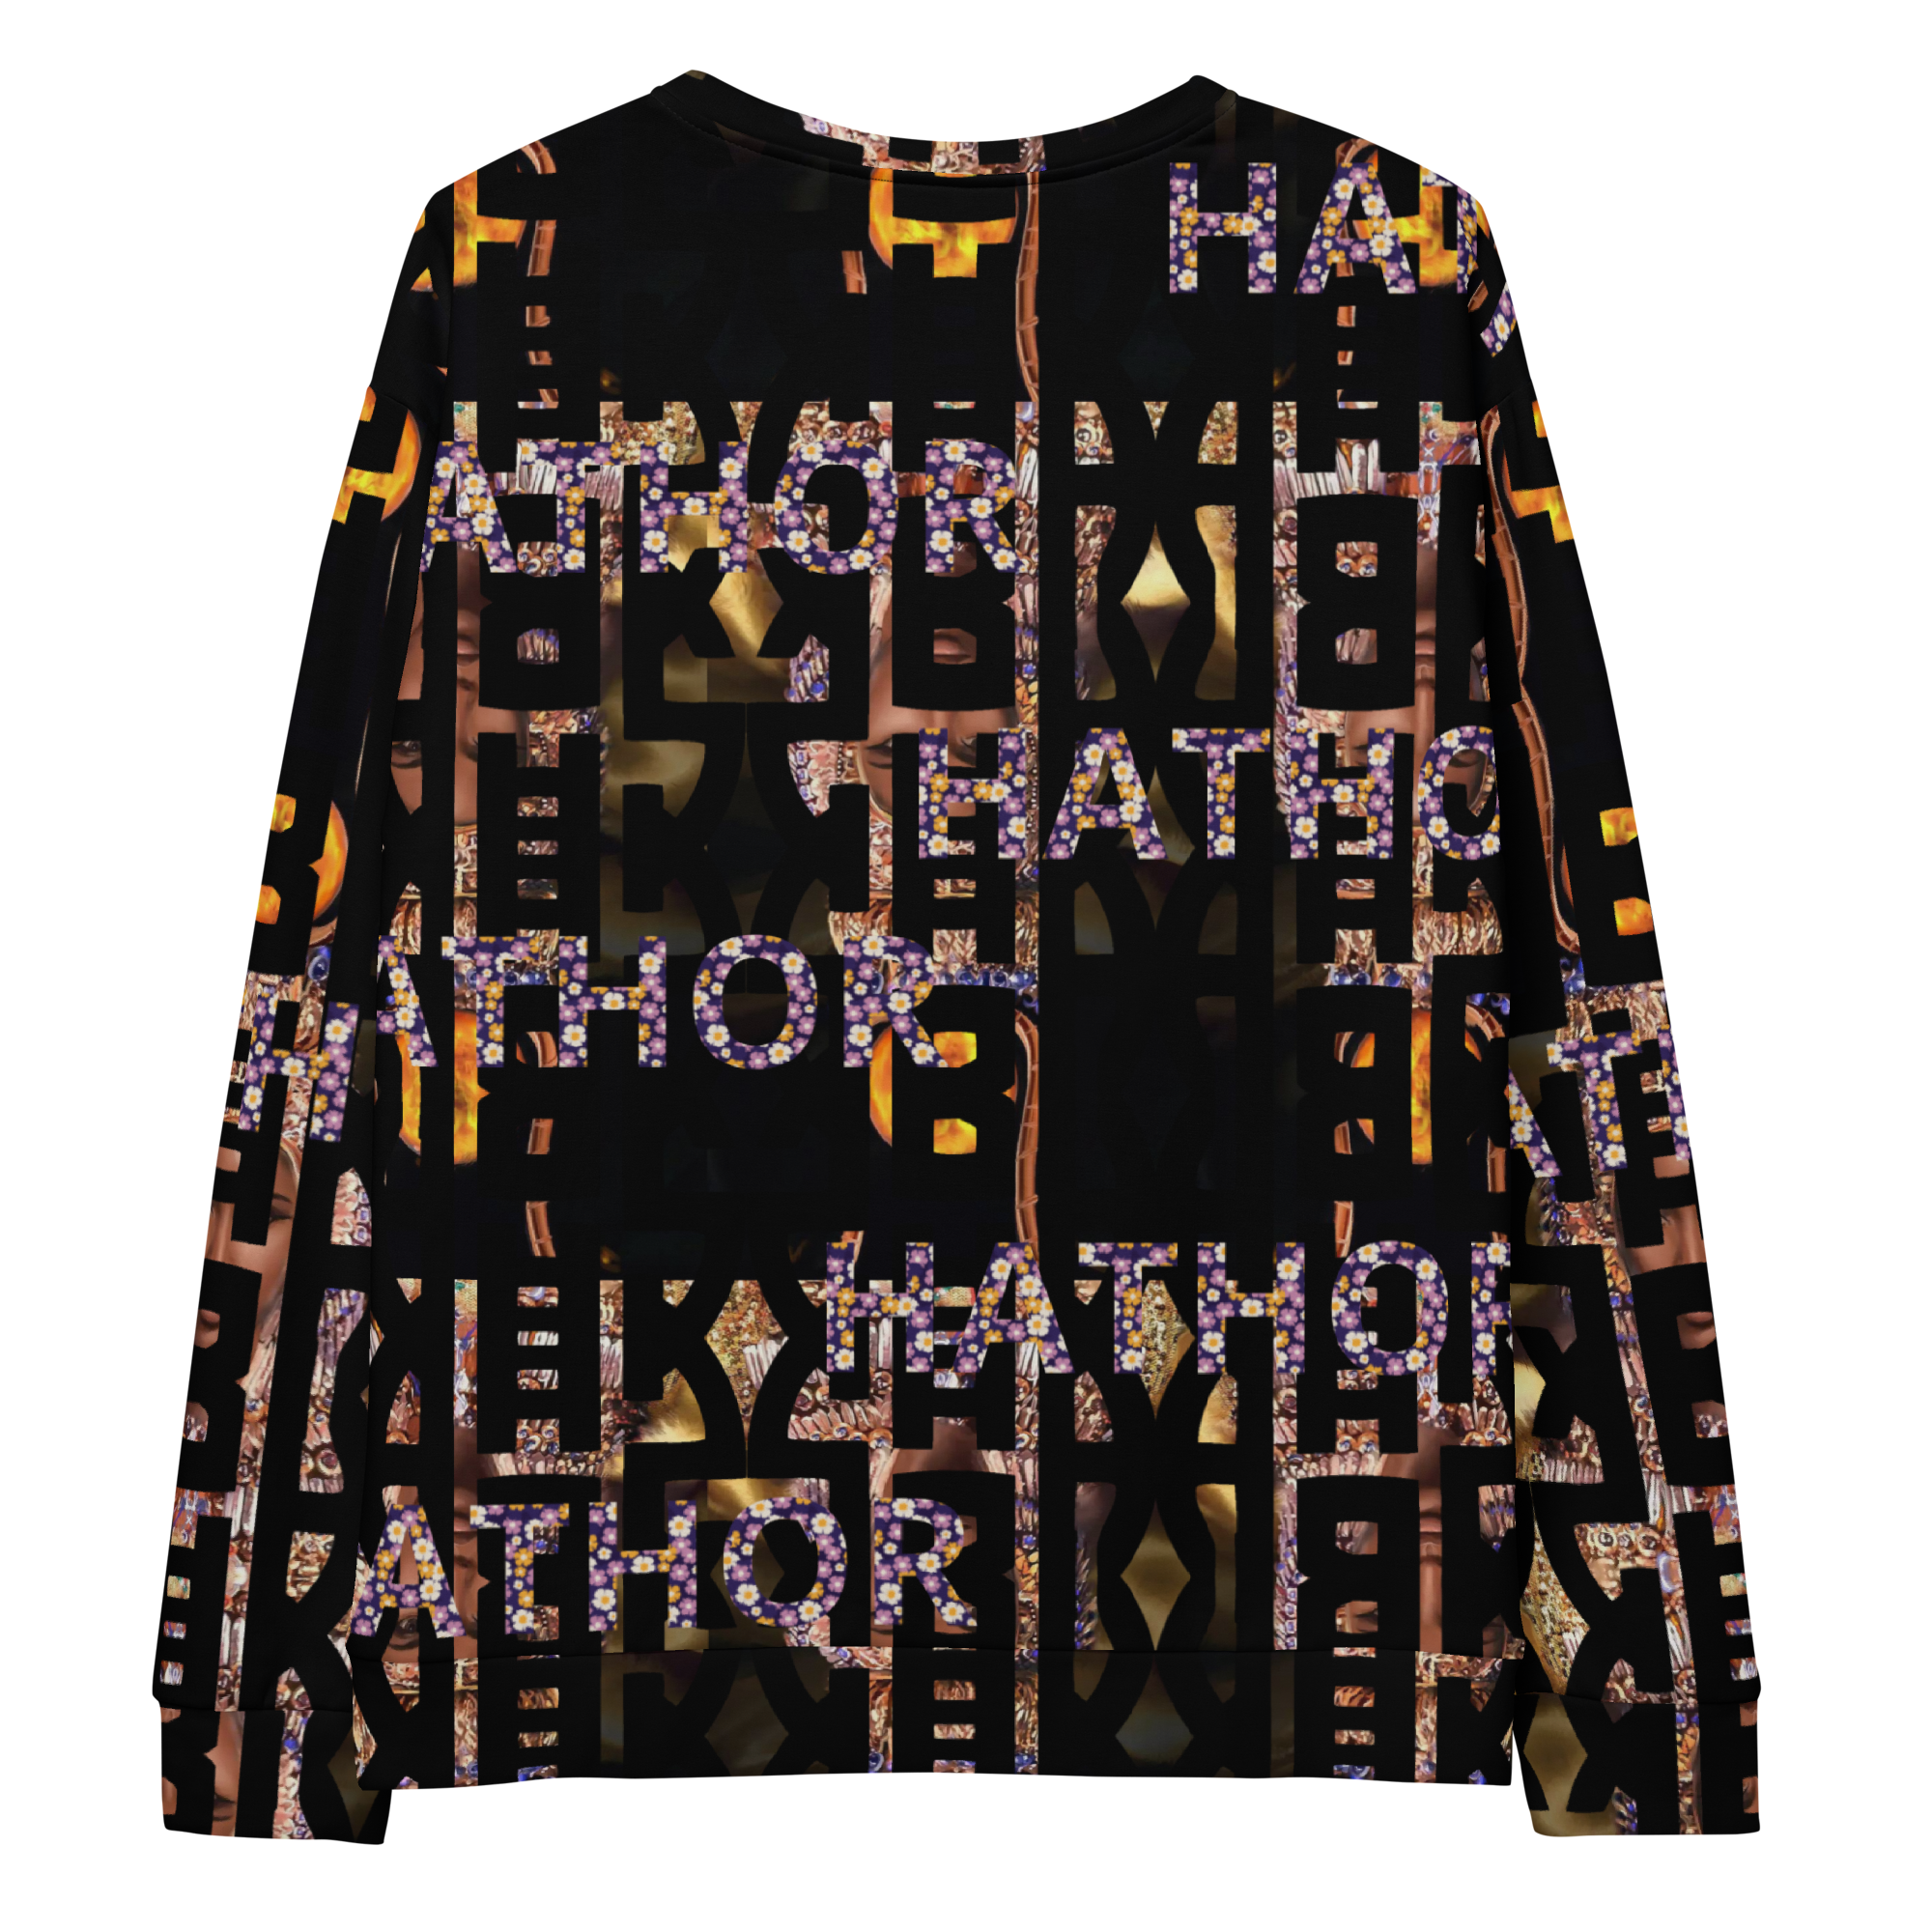 Hathor Goddess Sweatshirt